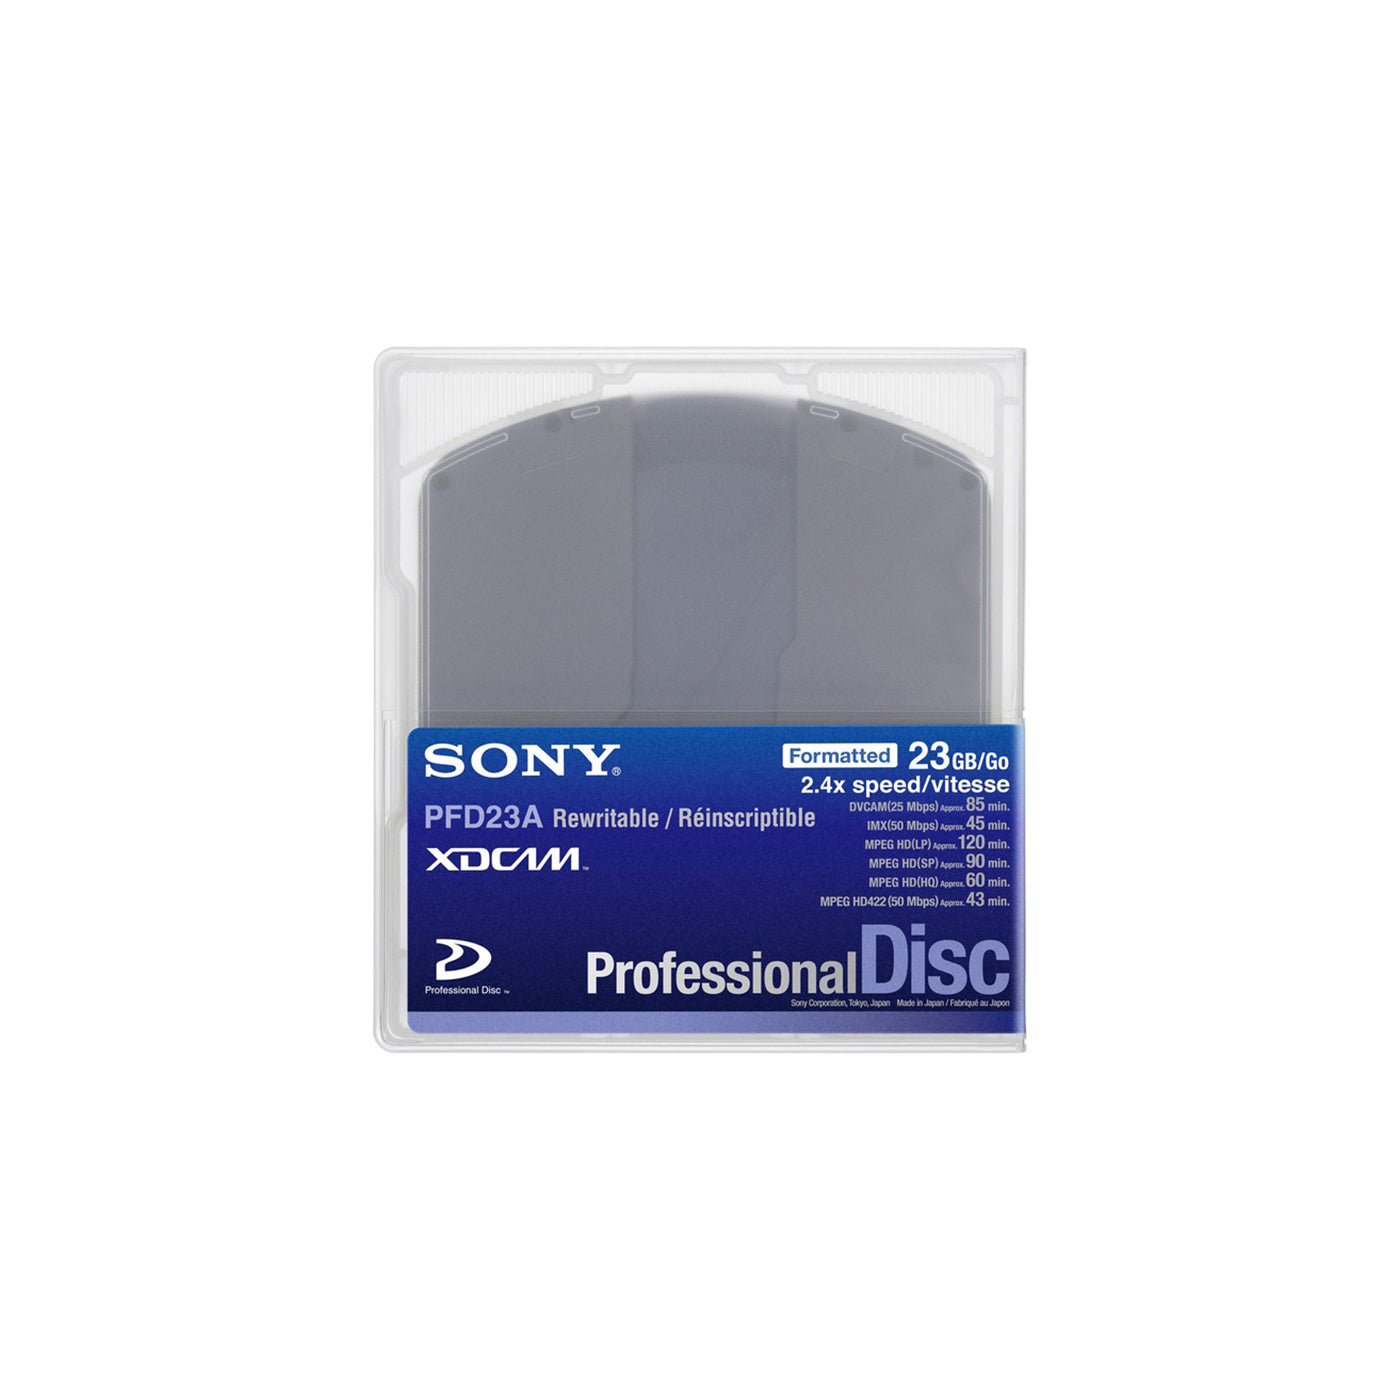 PFD23AX - Single, Dual, Triple, and Quad layer Professional Disc